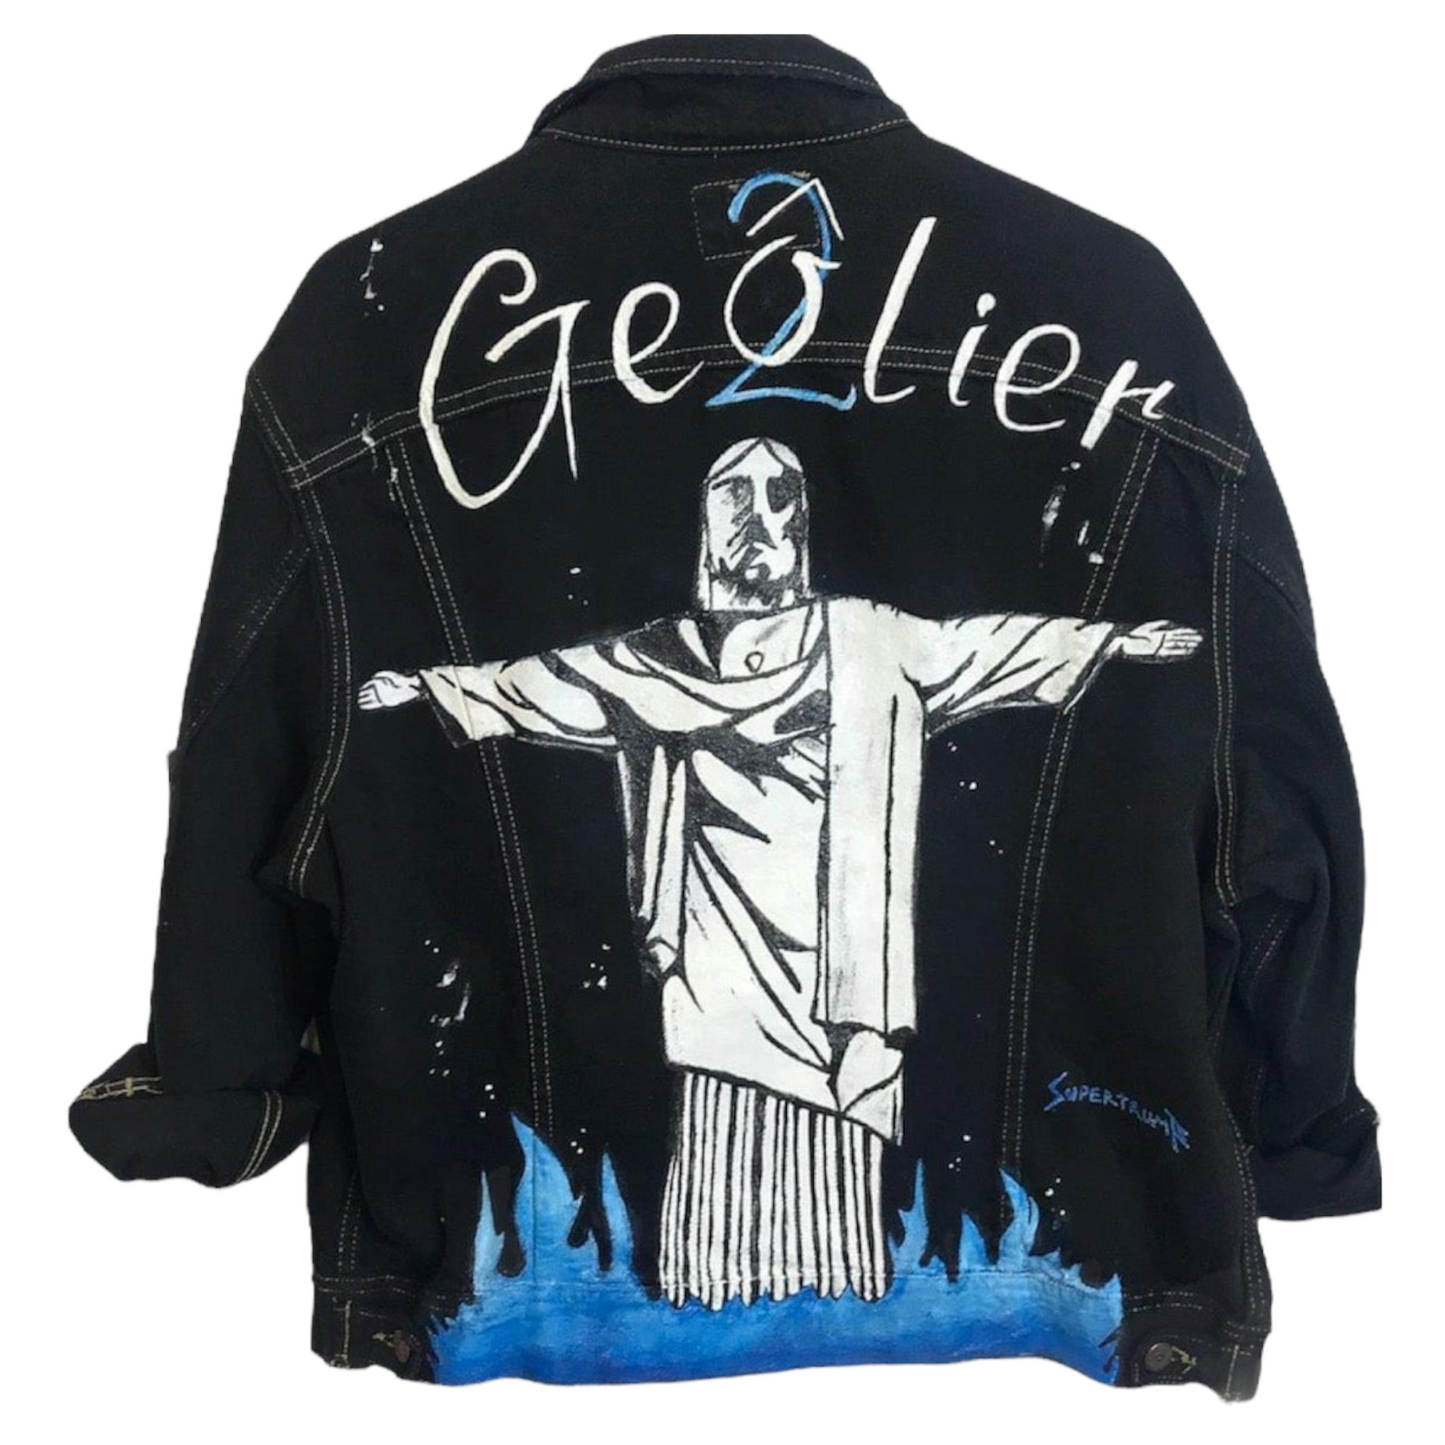 Geolier custom Jacket